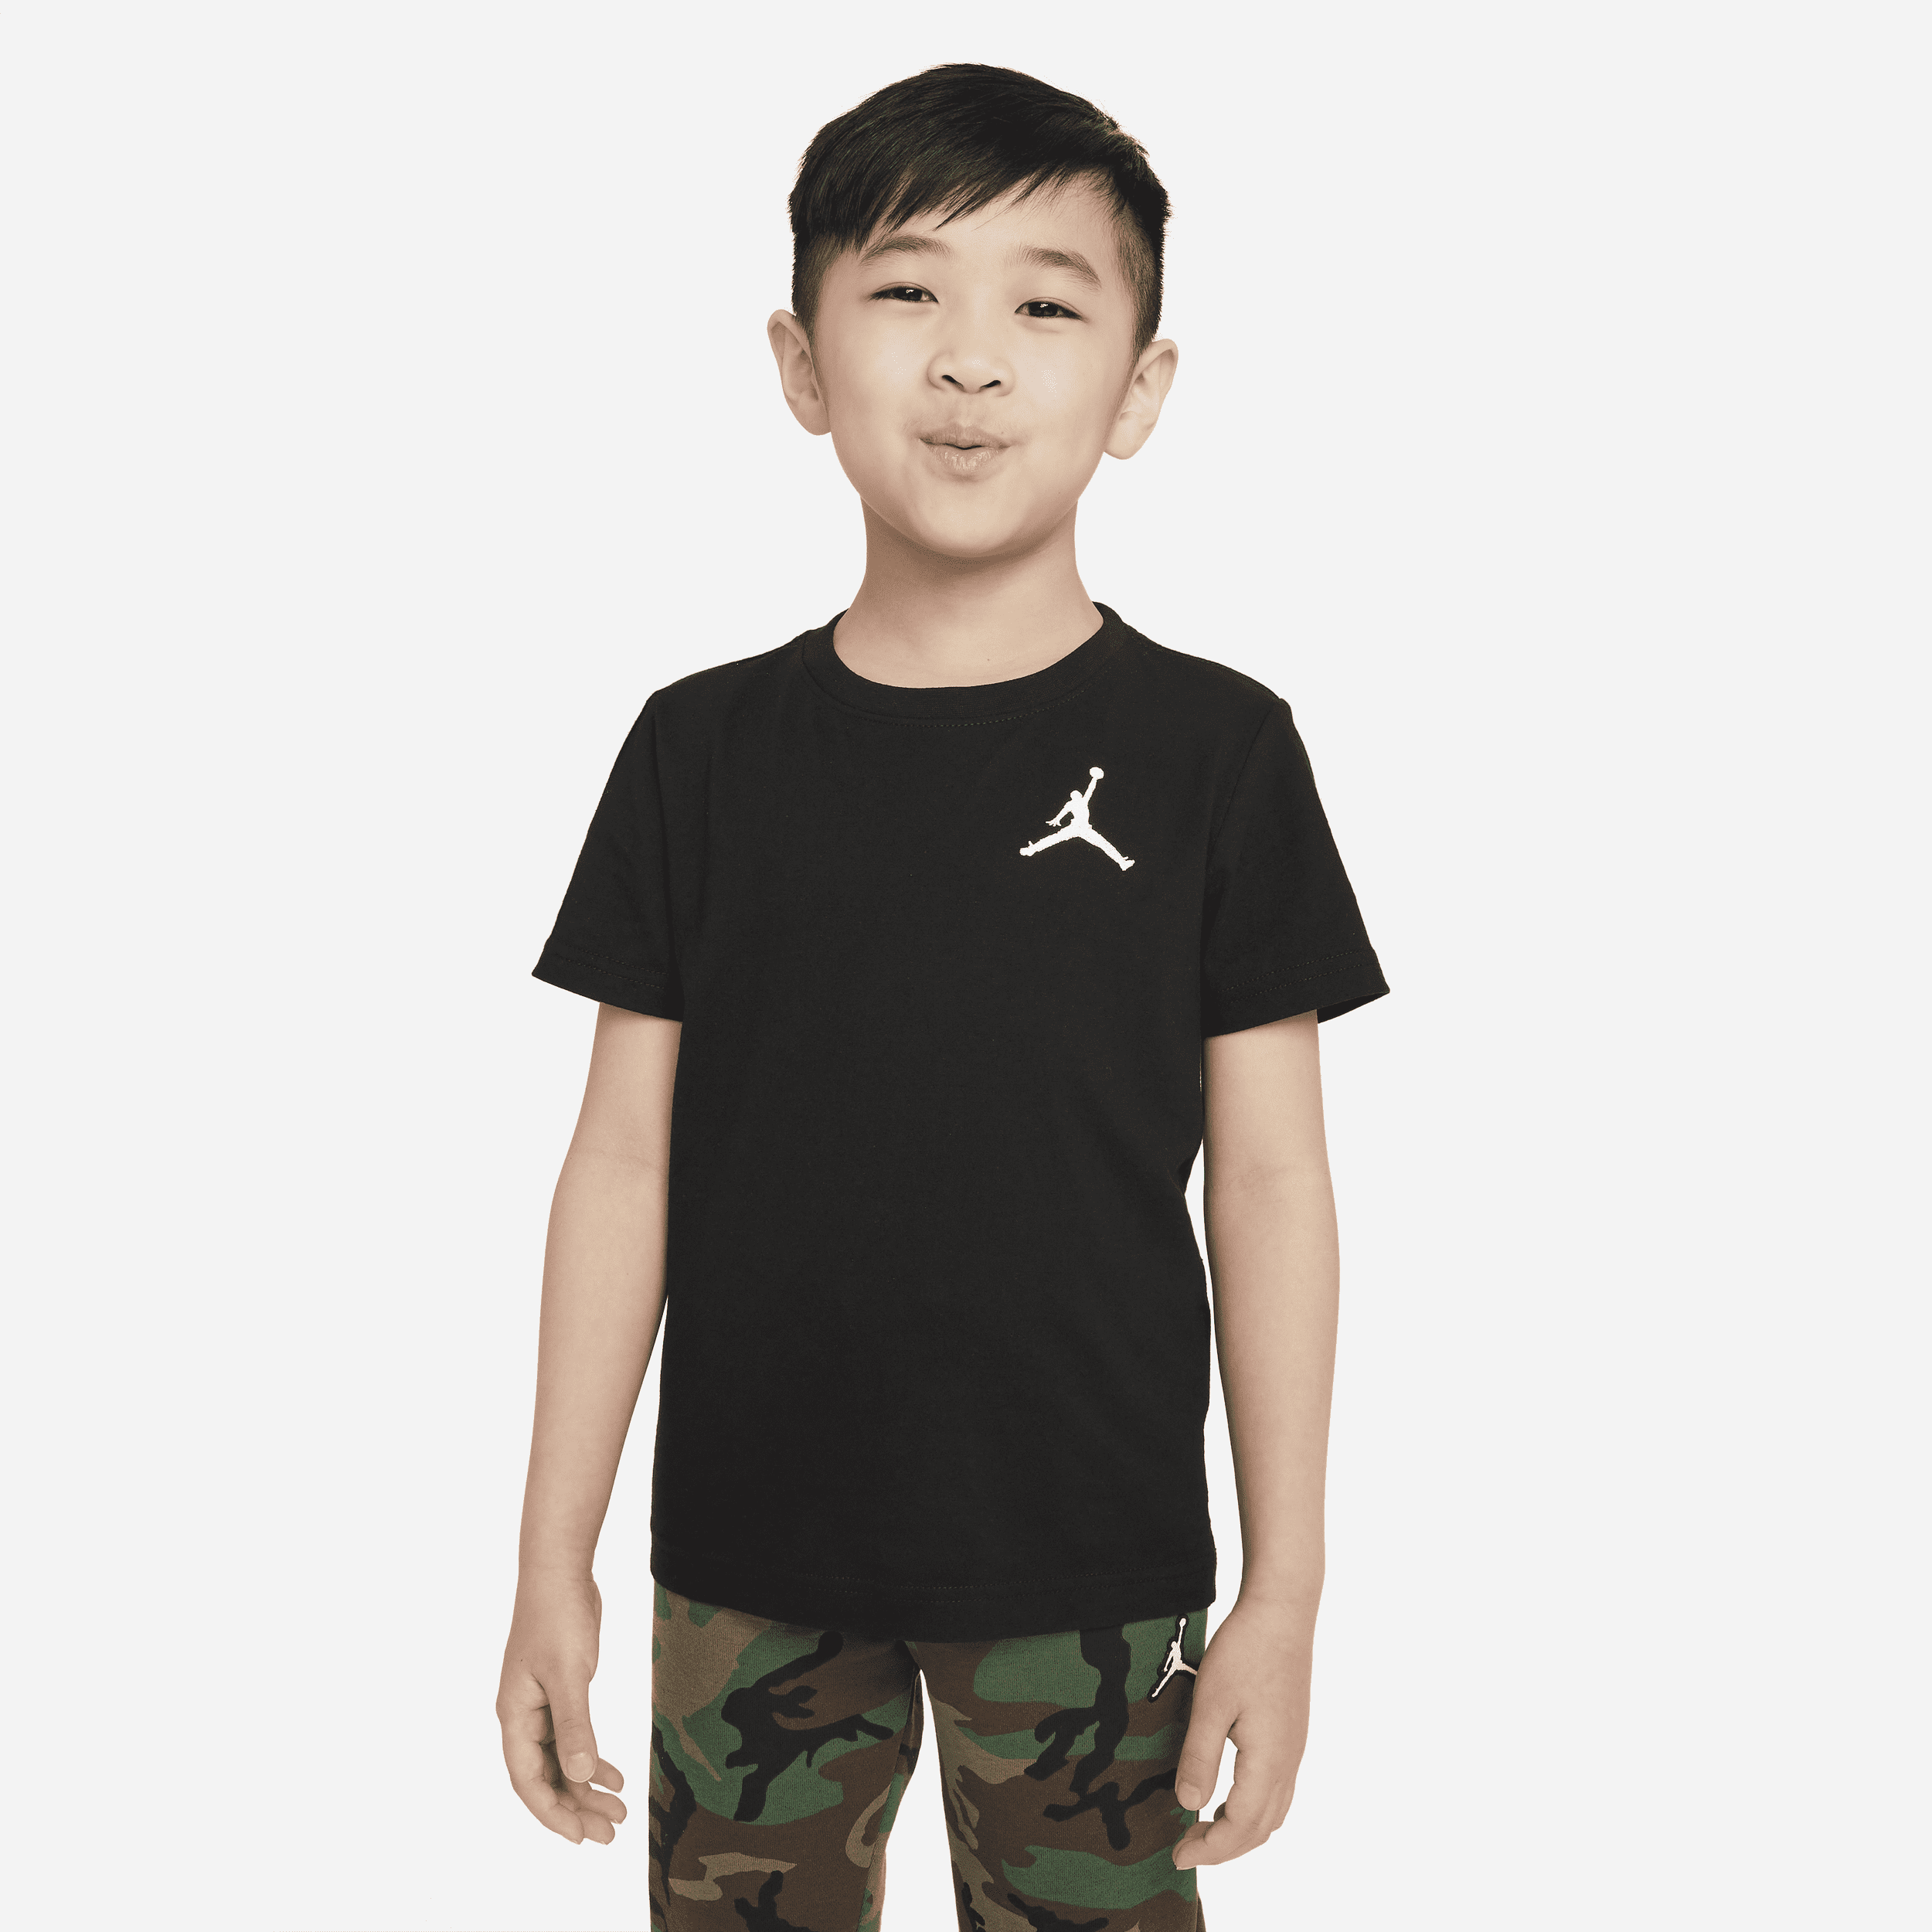 Jordan Camiseta - Niño/a pequeño/a - Negro